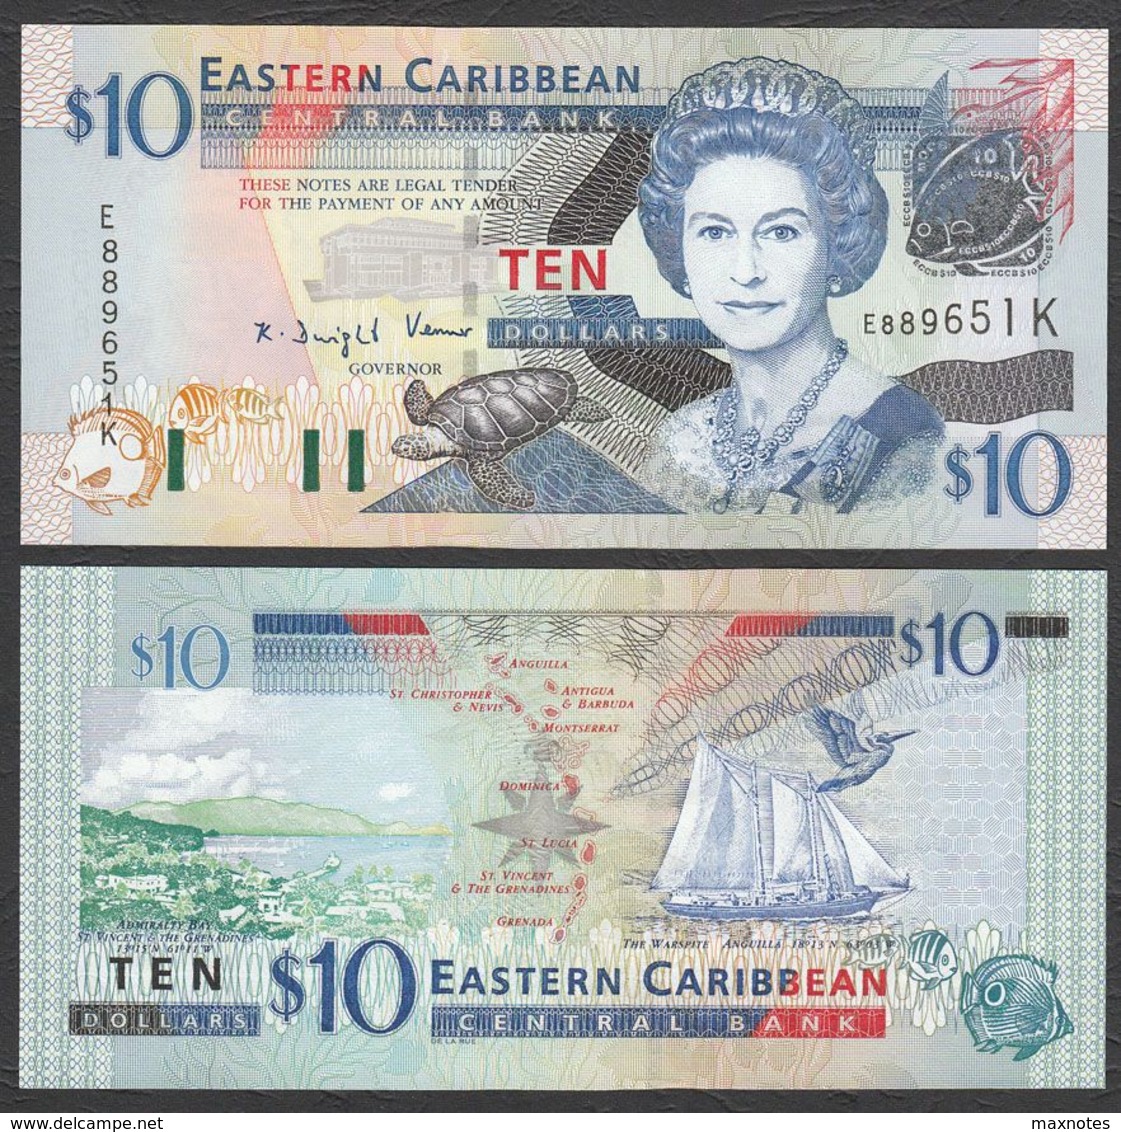 CARAIBI ORIENTALE (EASTERN CARIBBEAN) : 10 Dollars - P43k - St. KITTS - Queen Elisabeth II - 2003 - UNC - East Carribeans